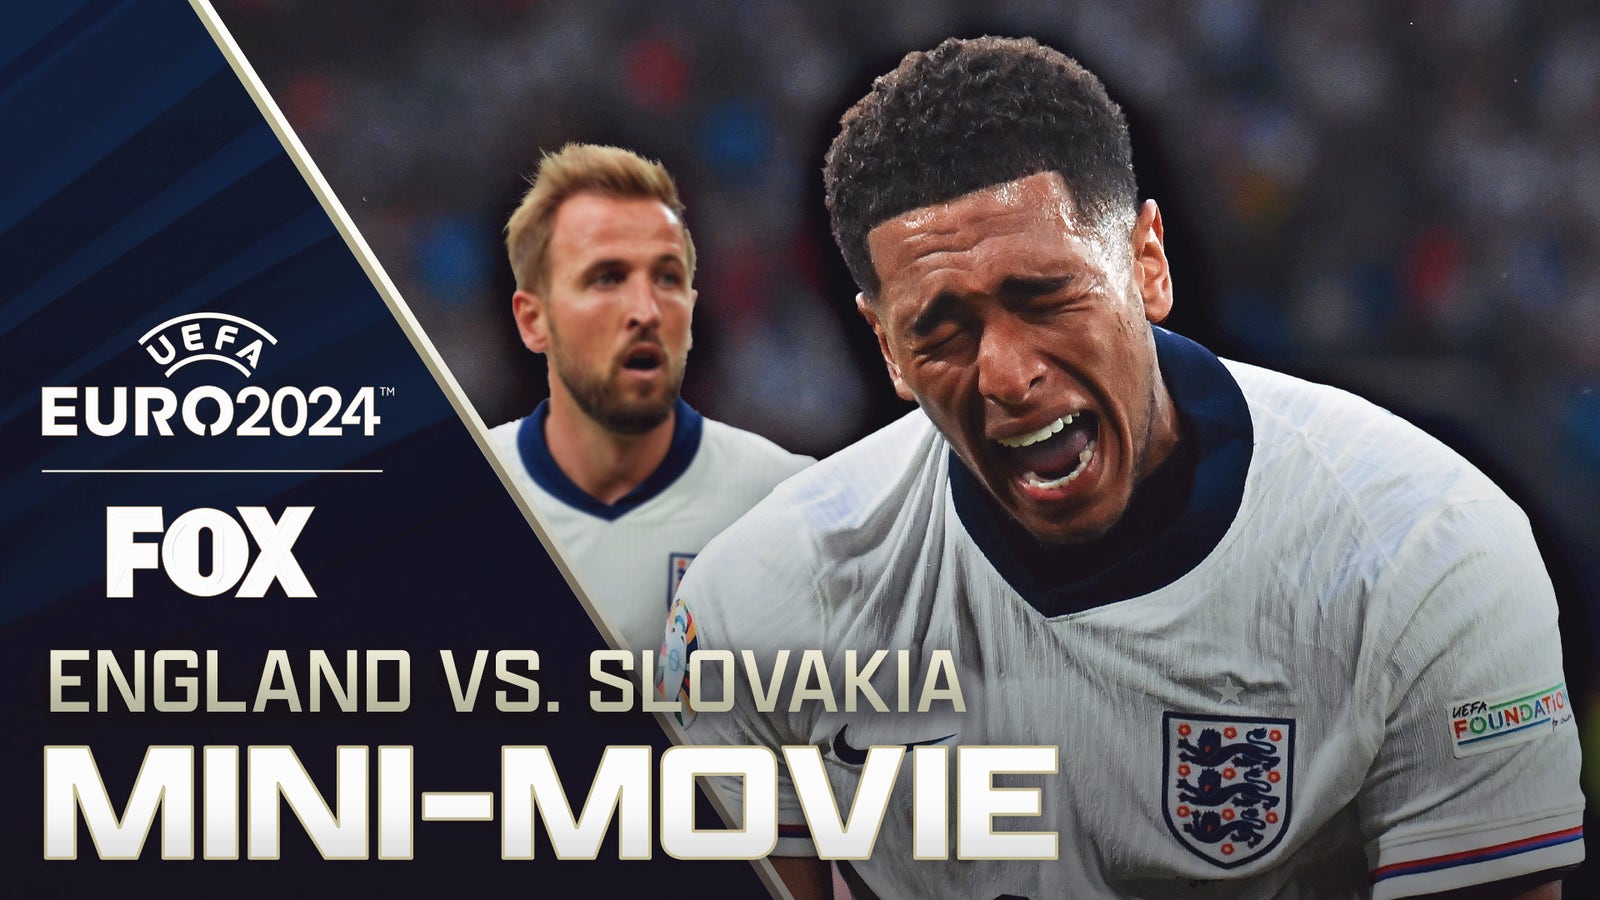 England vs. Slovakia: MINI-MOVIE of England's epic comeback